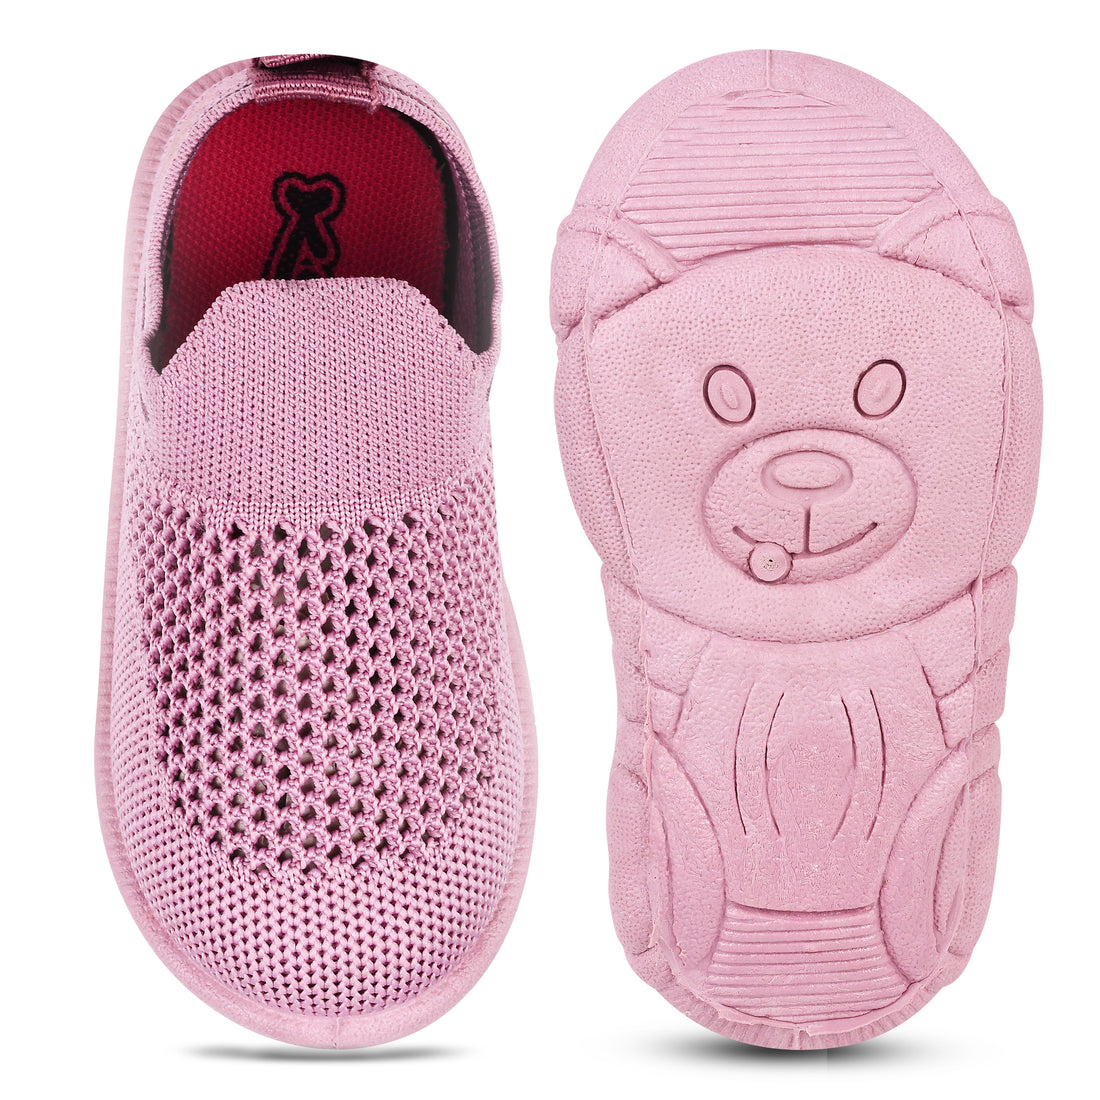 Kats FLYKIDS-15 New Born Baby Musical CHU CHU Sound Slip-on Kids Walking Shoes (9 Months to 24 Months)